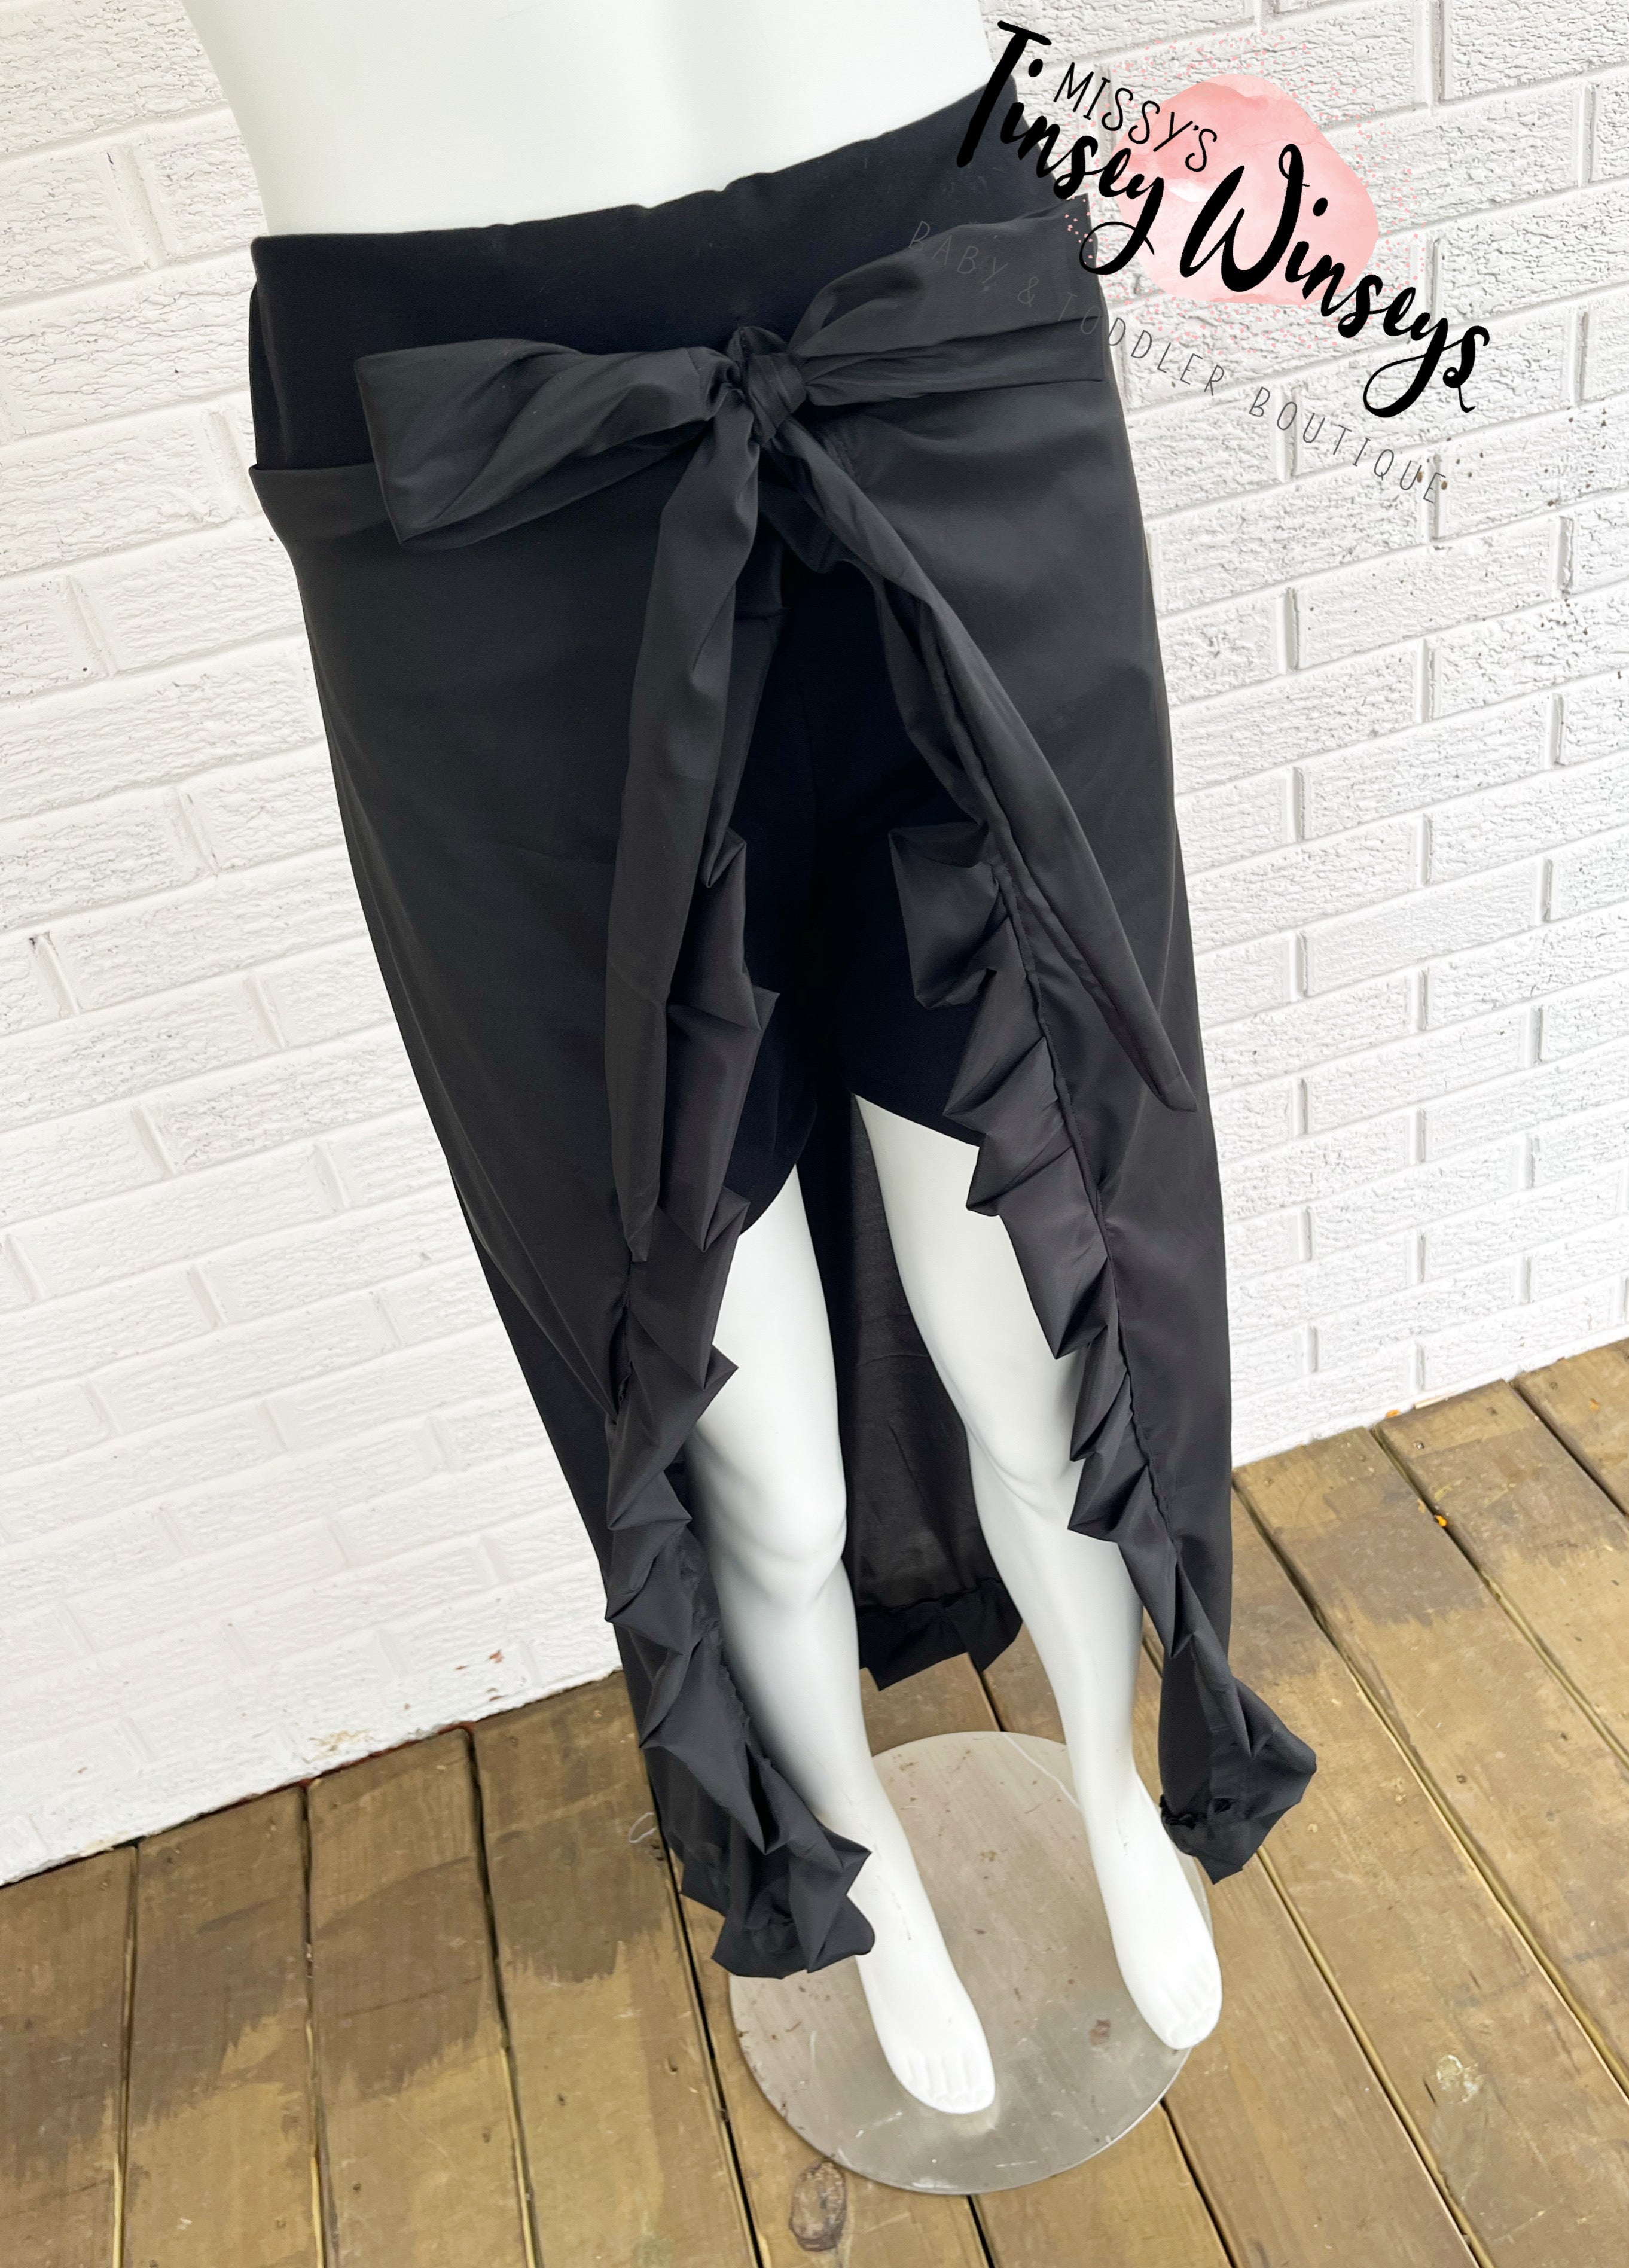 Black Shorts with Ruffle Skirt Overlay